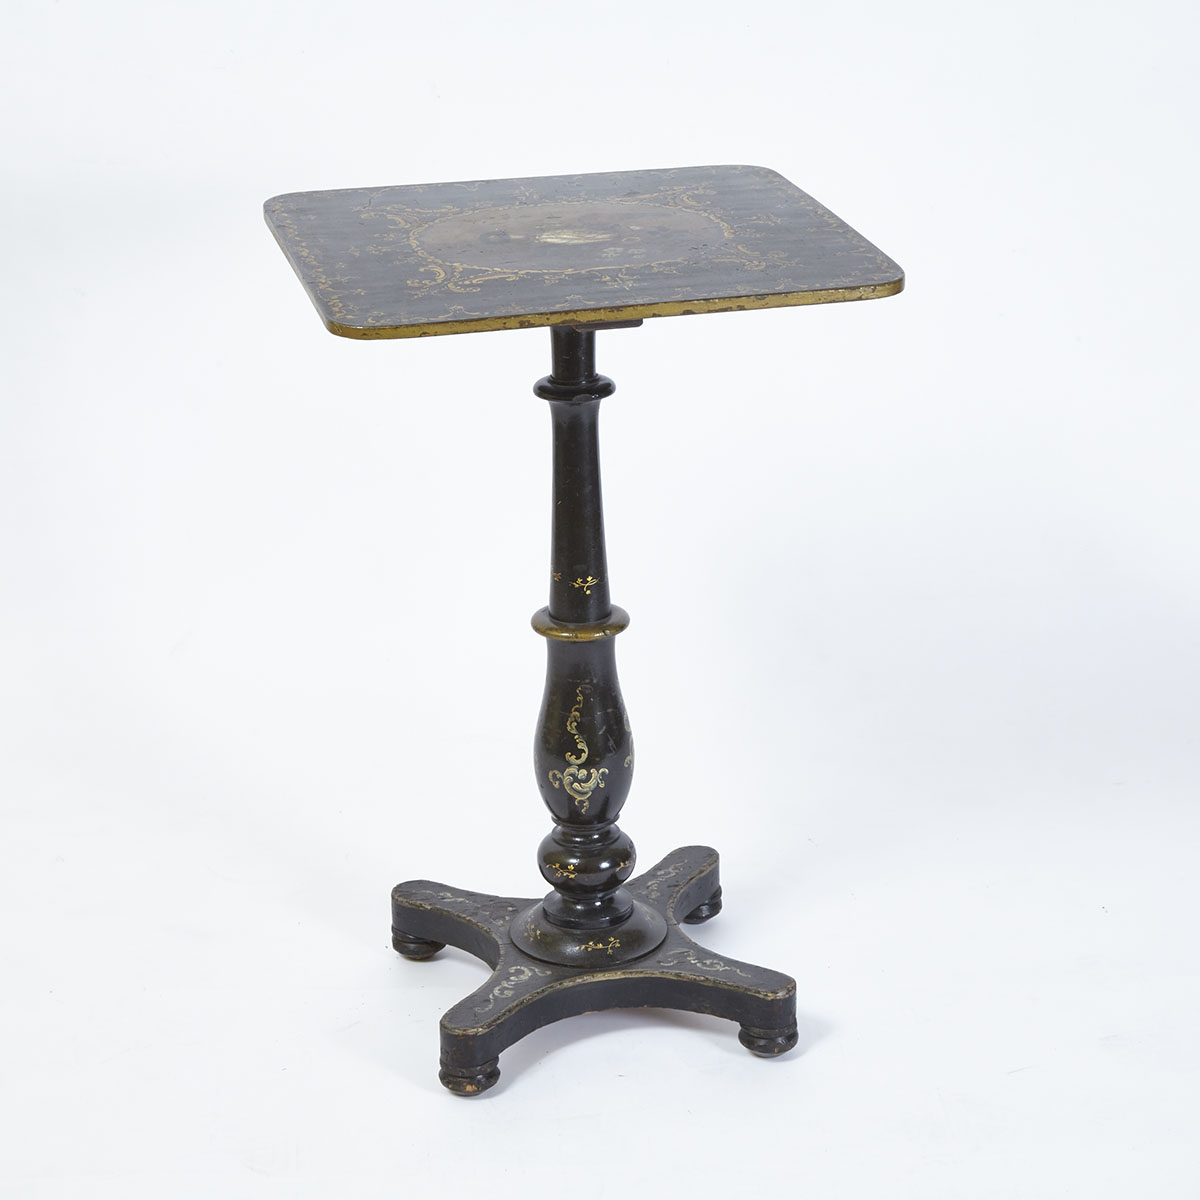 Victorian Ebonized Tilt Top Occasional Table, English, mid 19th century